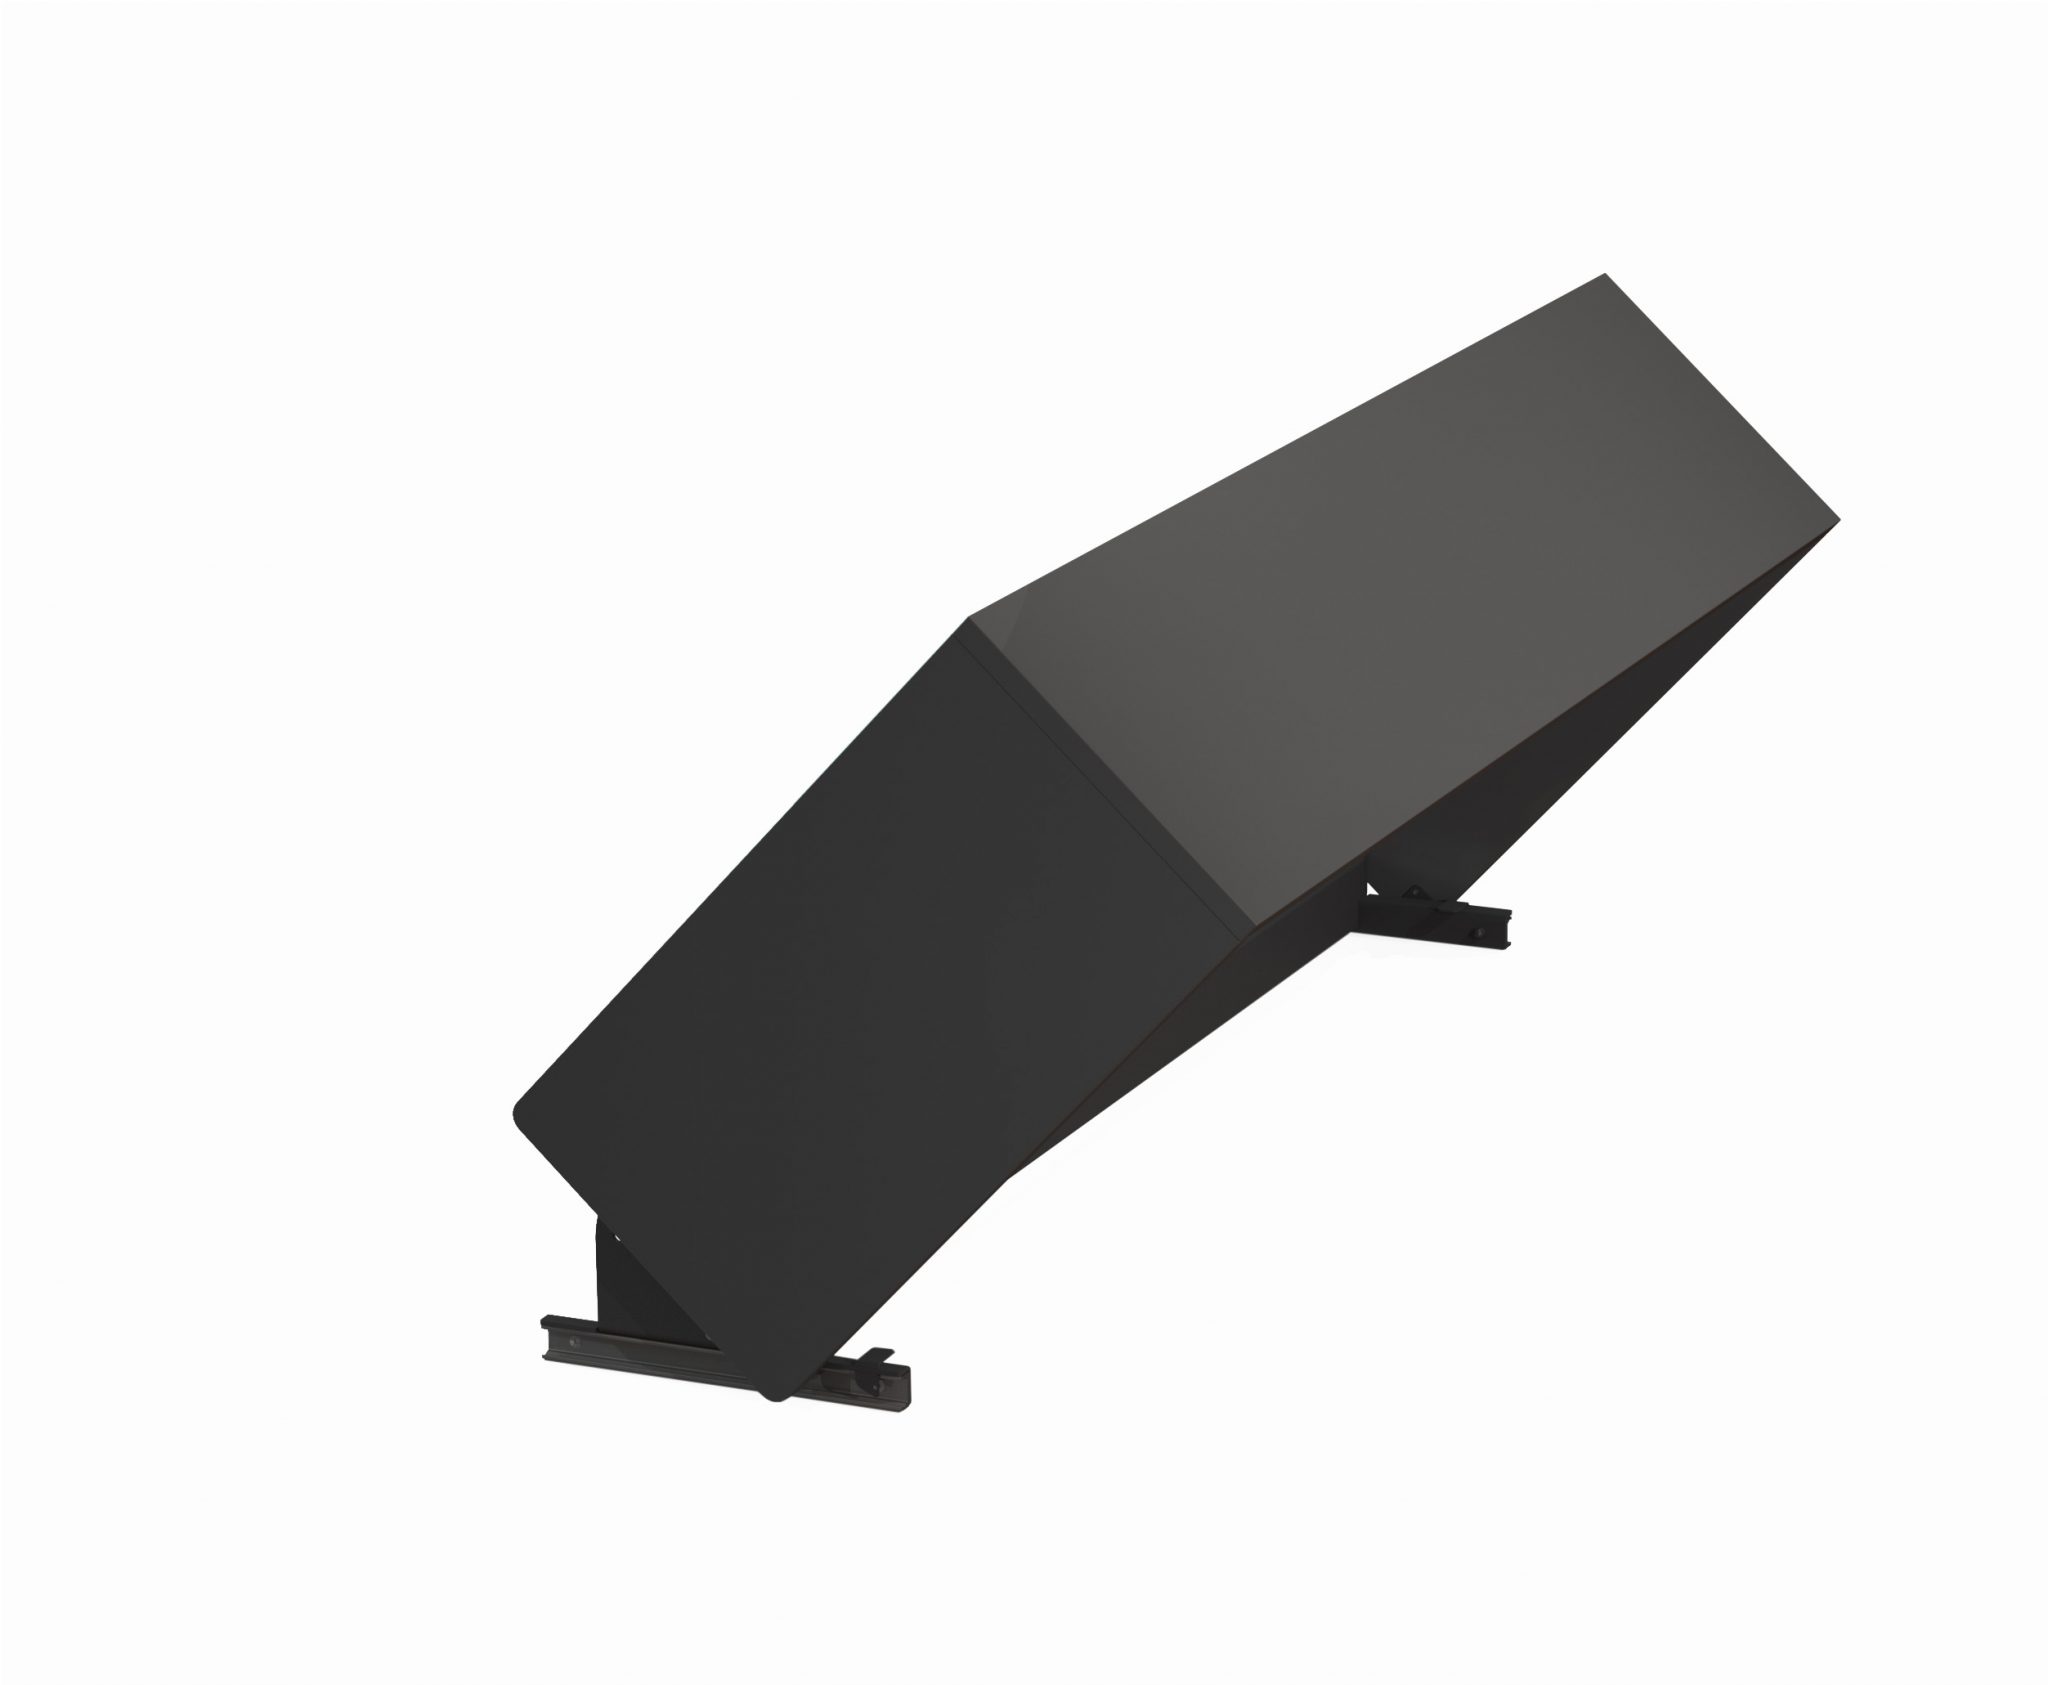 Tablebed Freestanding Single – Black